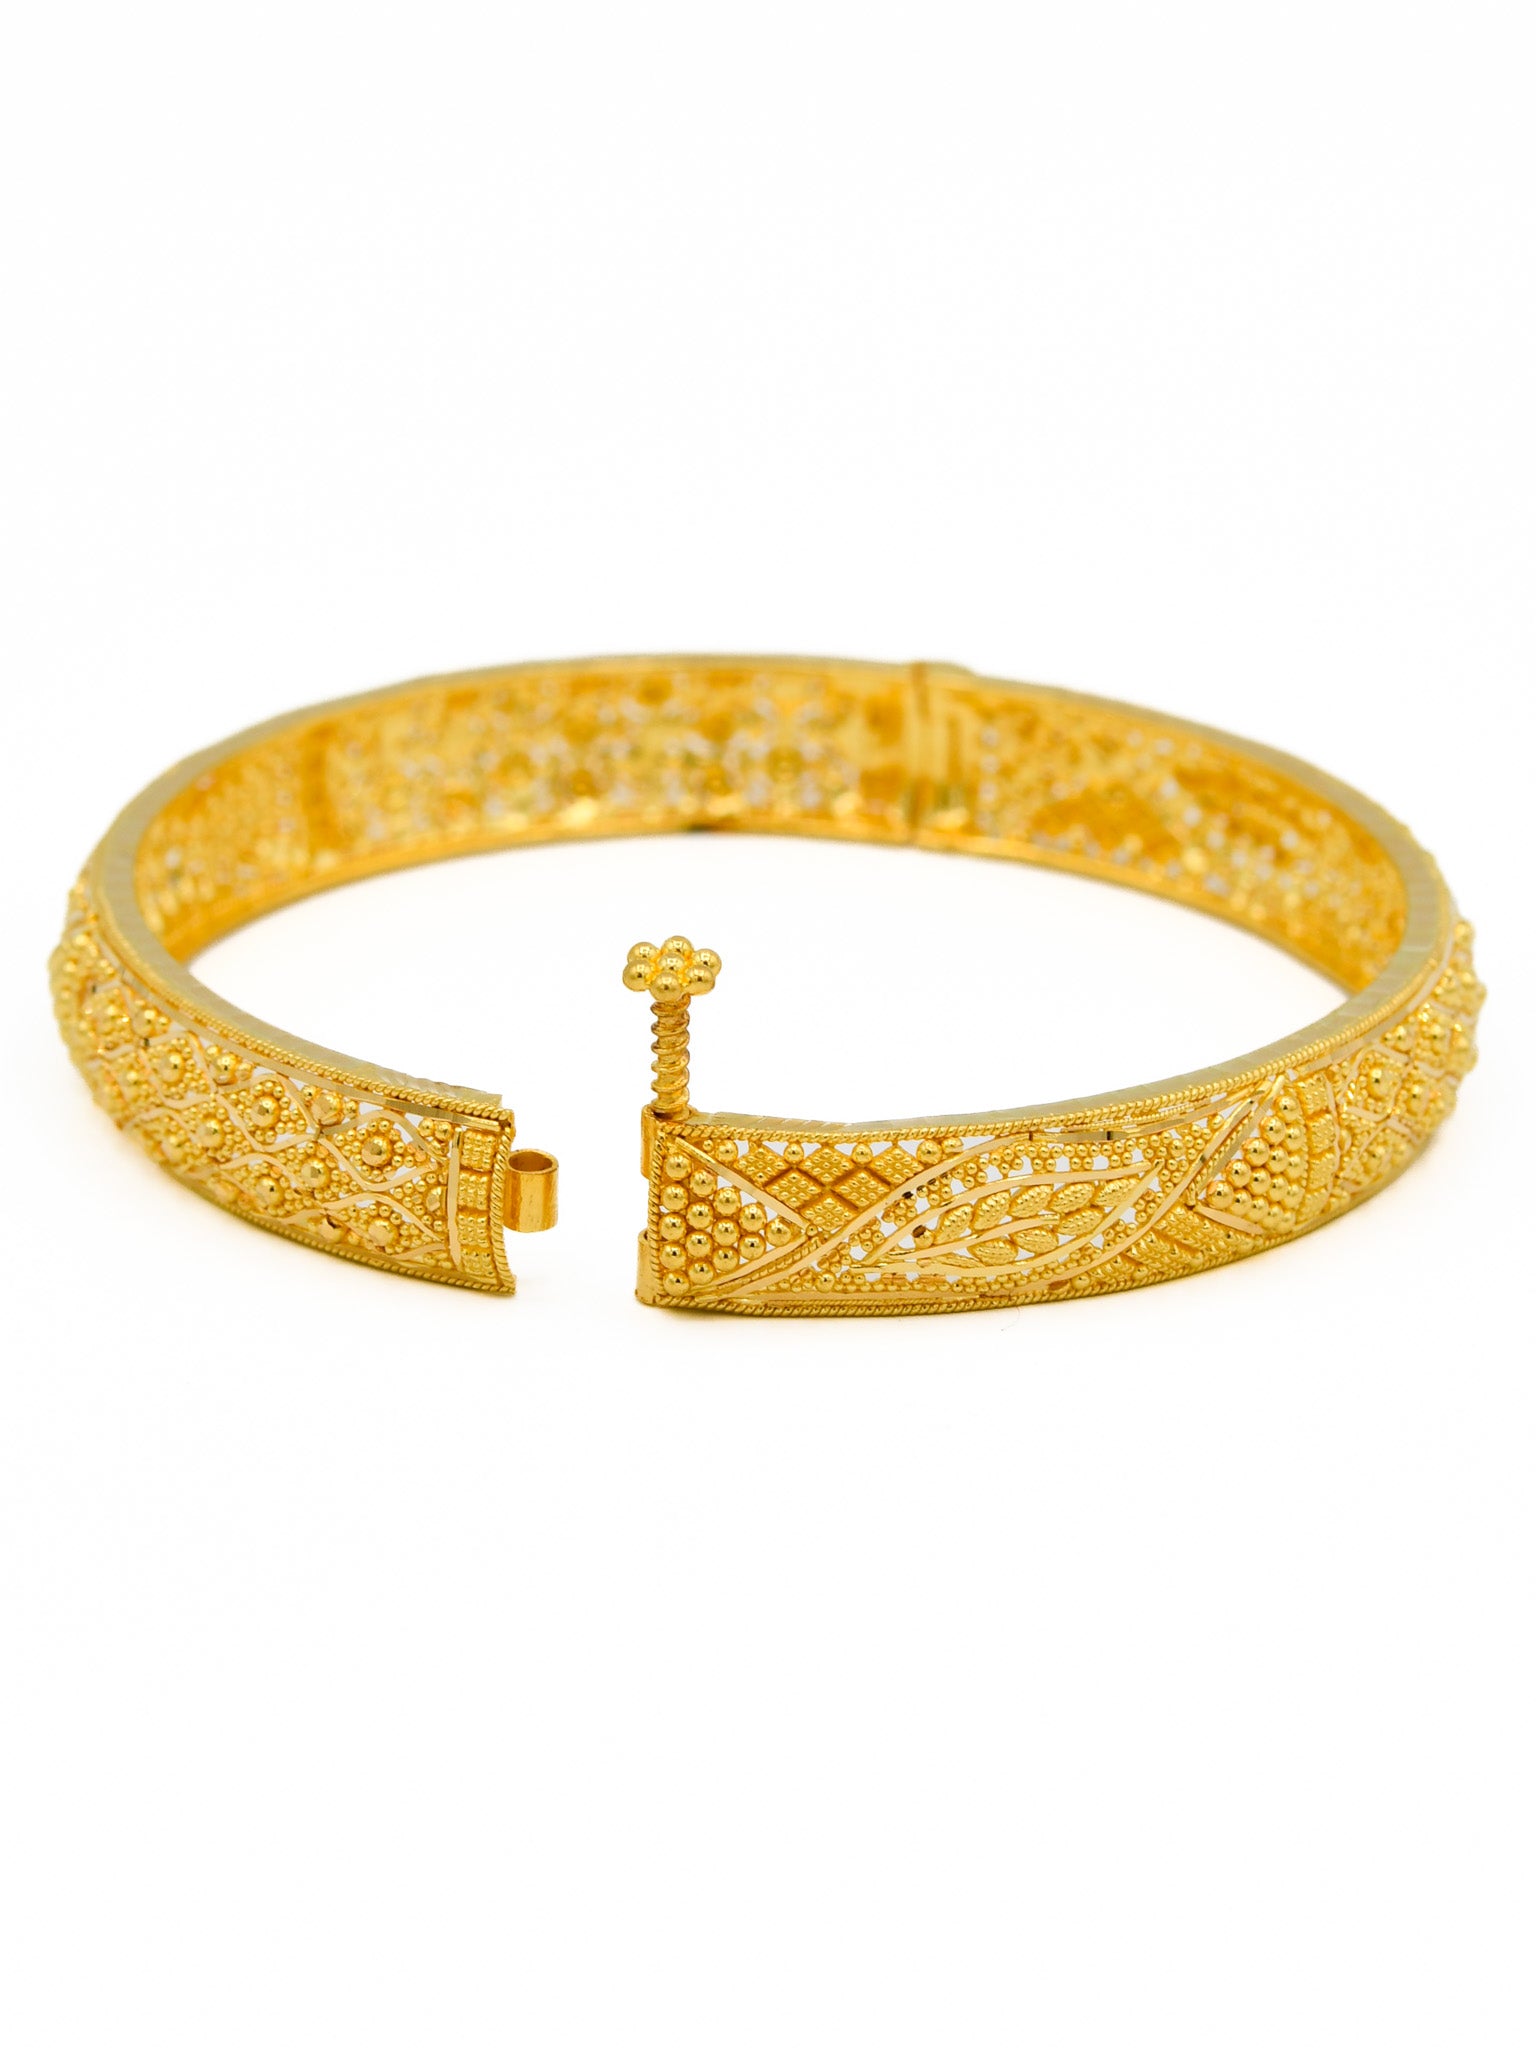 22ct gold plated Bracelet BANGLES Indian set gold d-60mm SCREW OPENING *  EACH ** | eBay